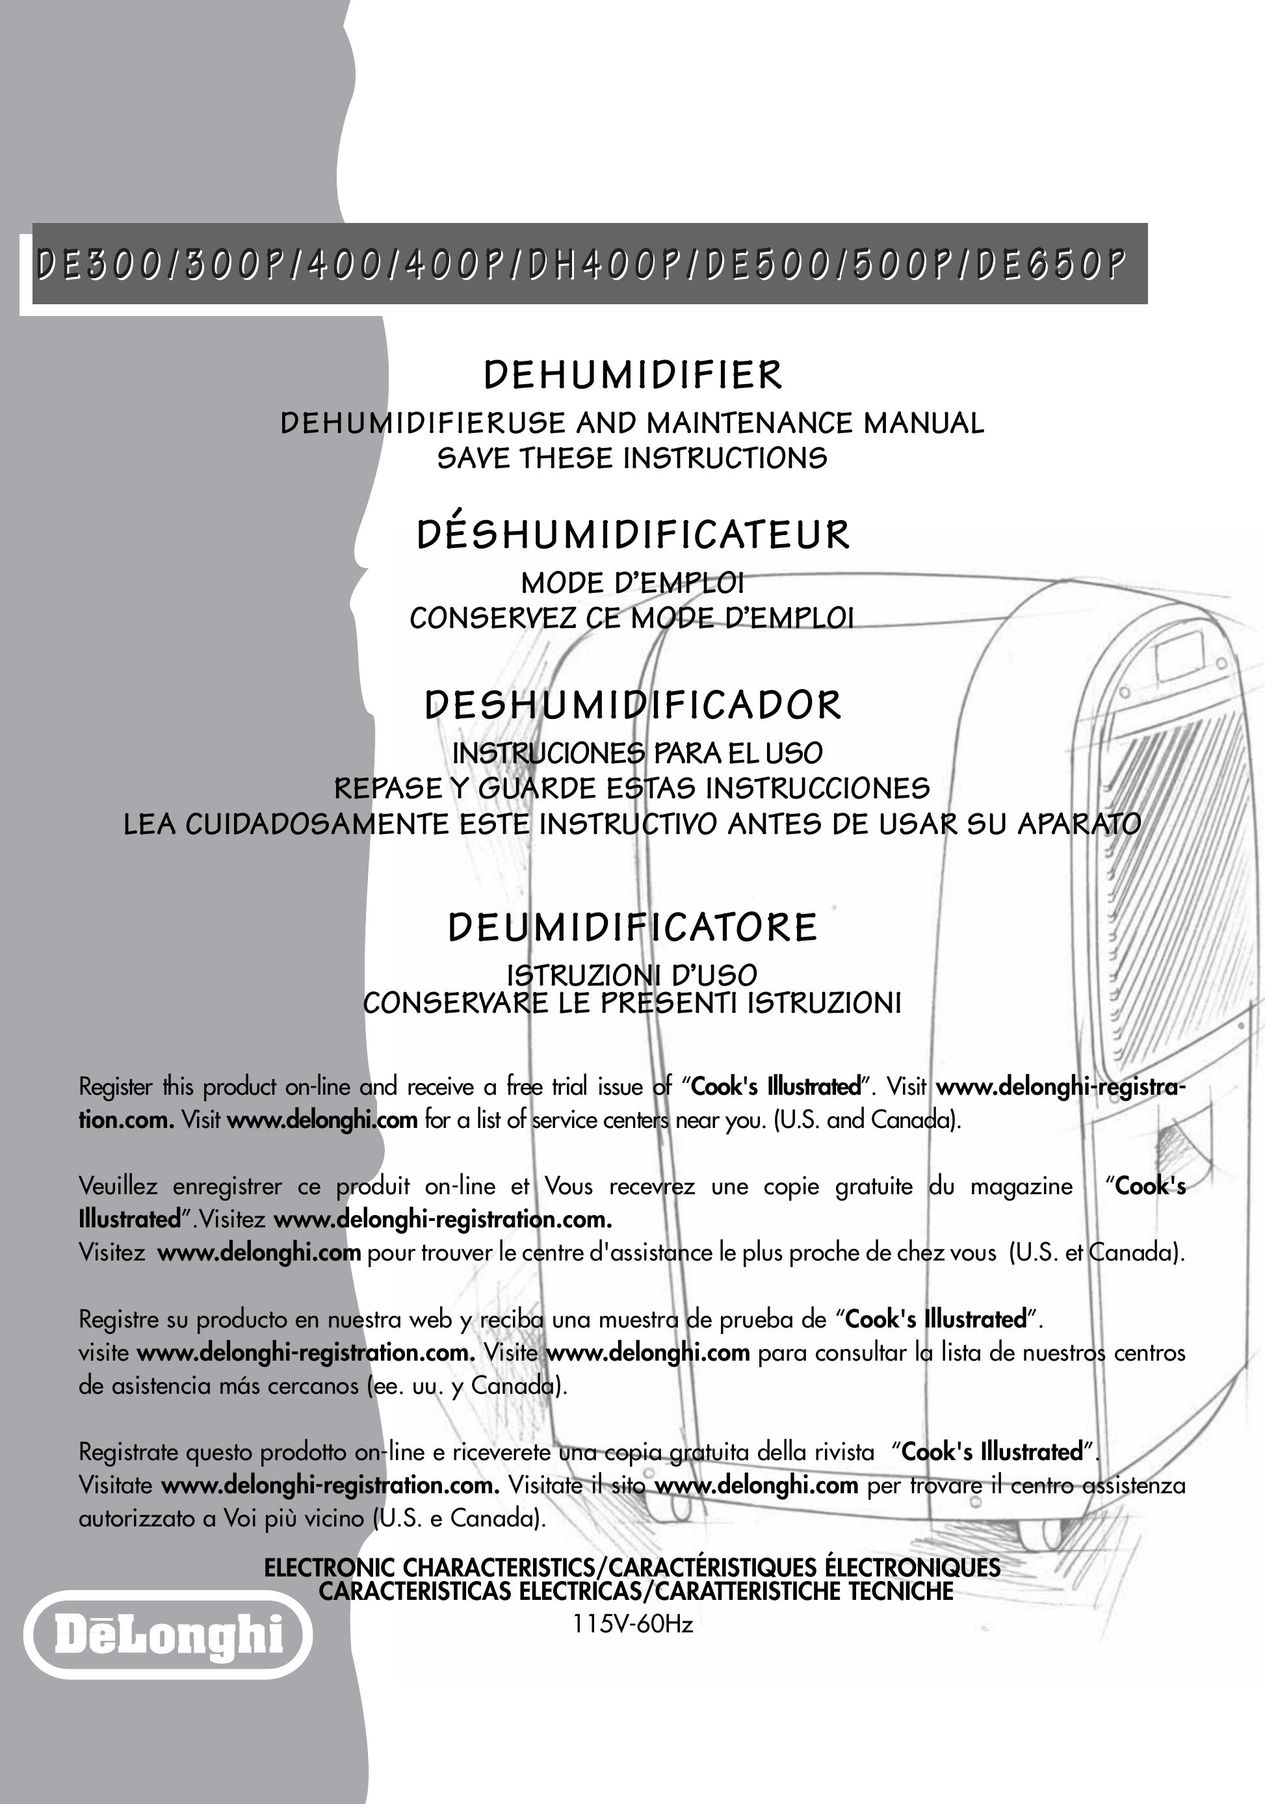 DeLonghi DH400P Dehumidifier User Manual